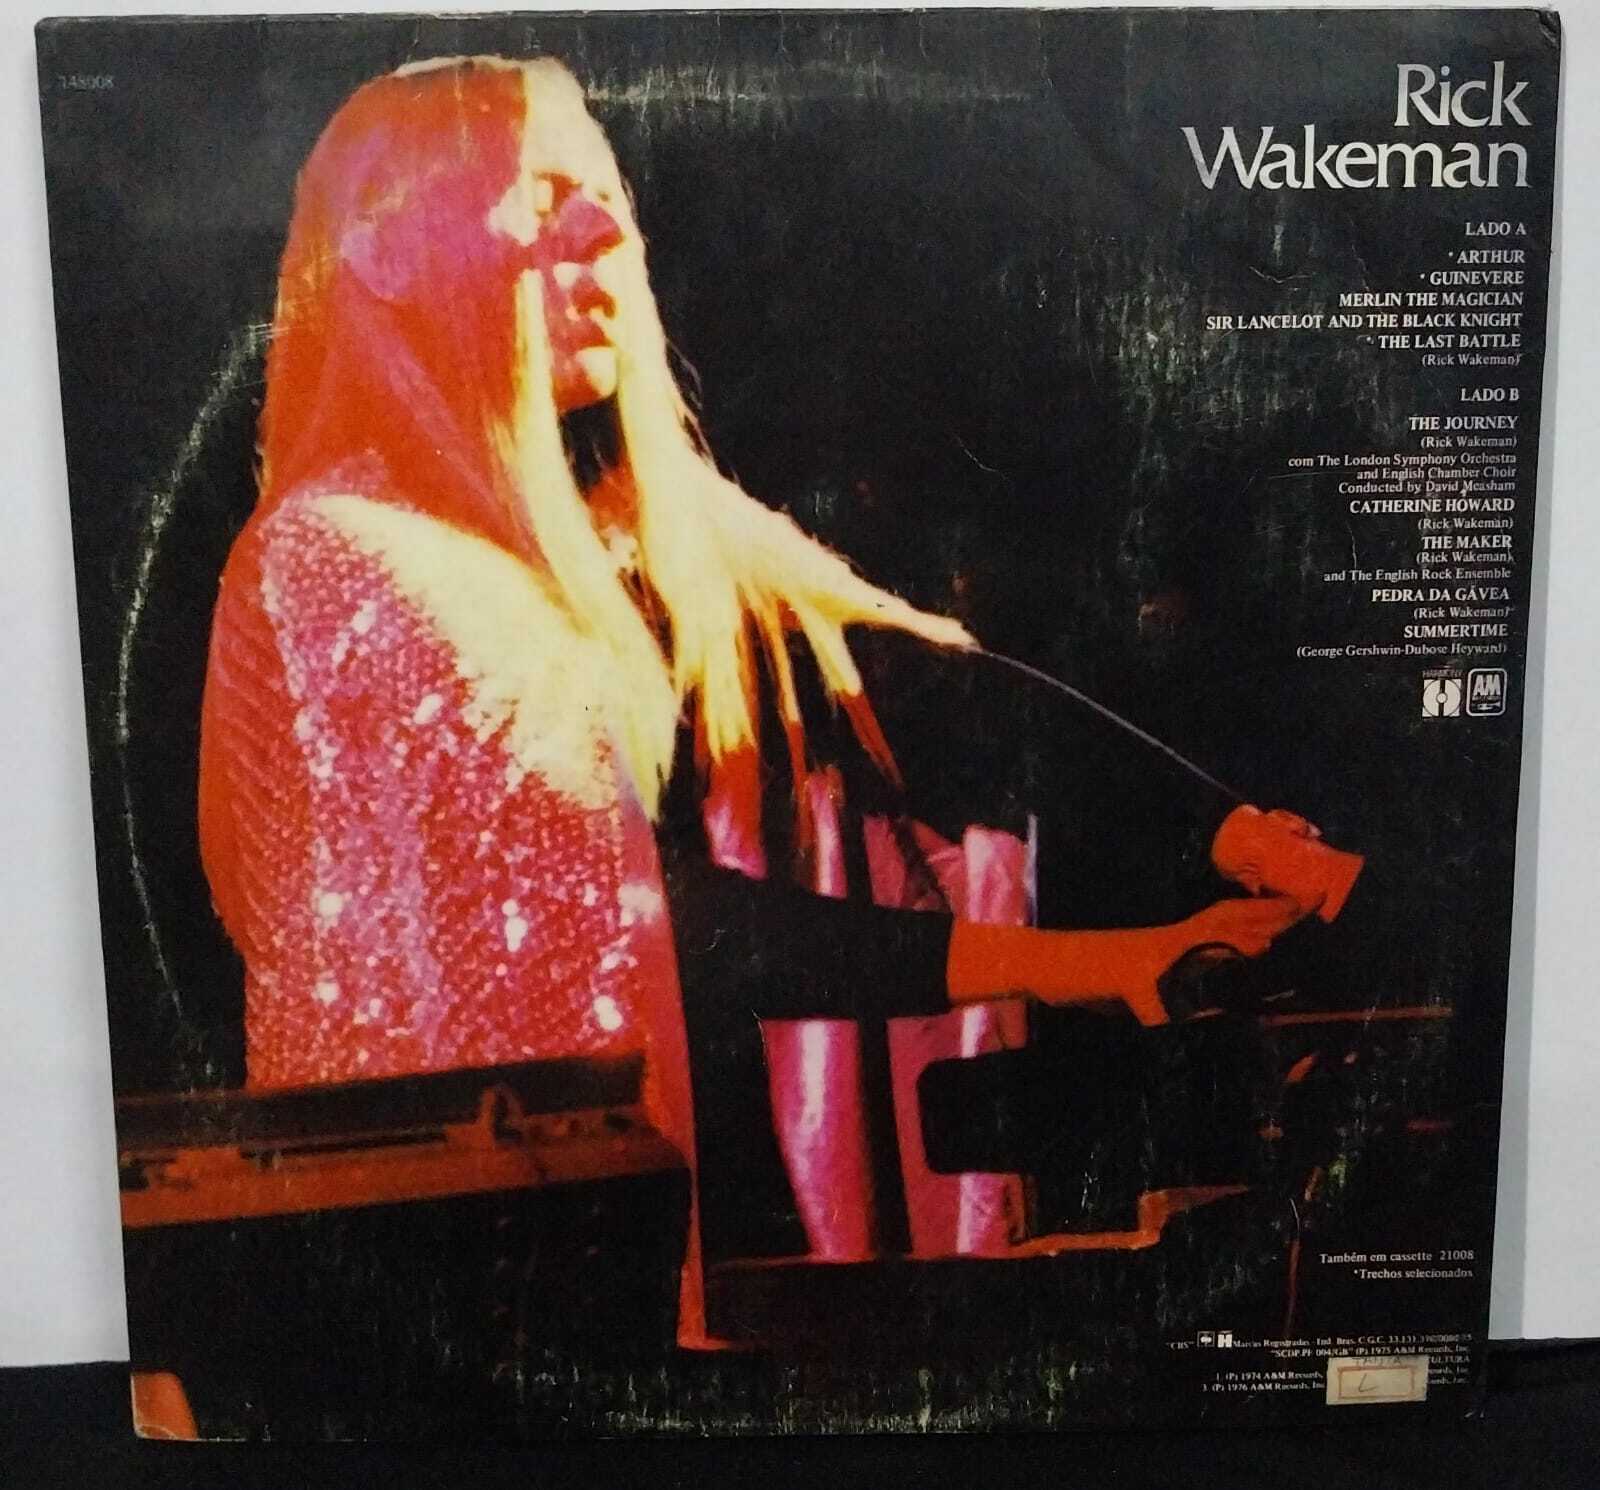 Vinil - Rick Wakeman - Magic Keyboards